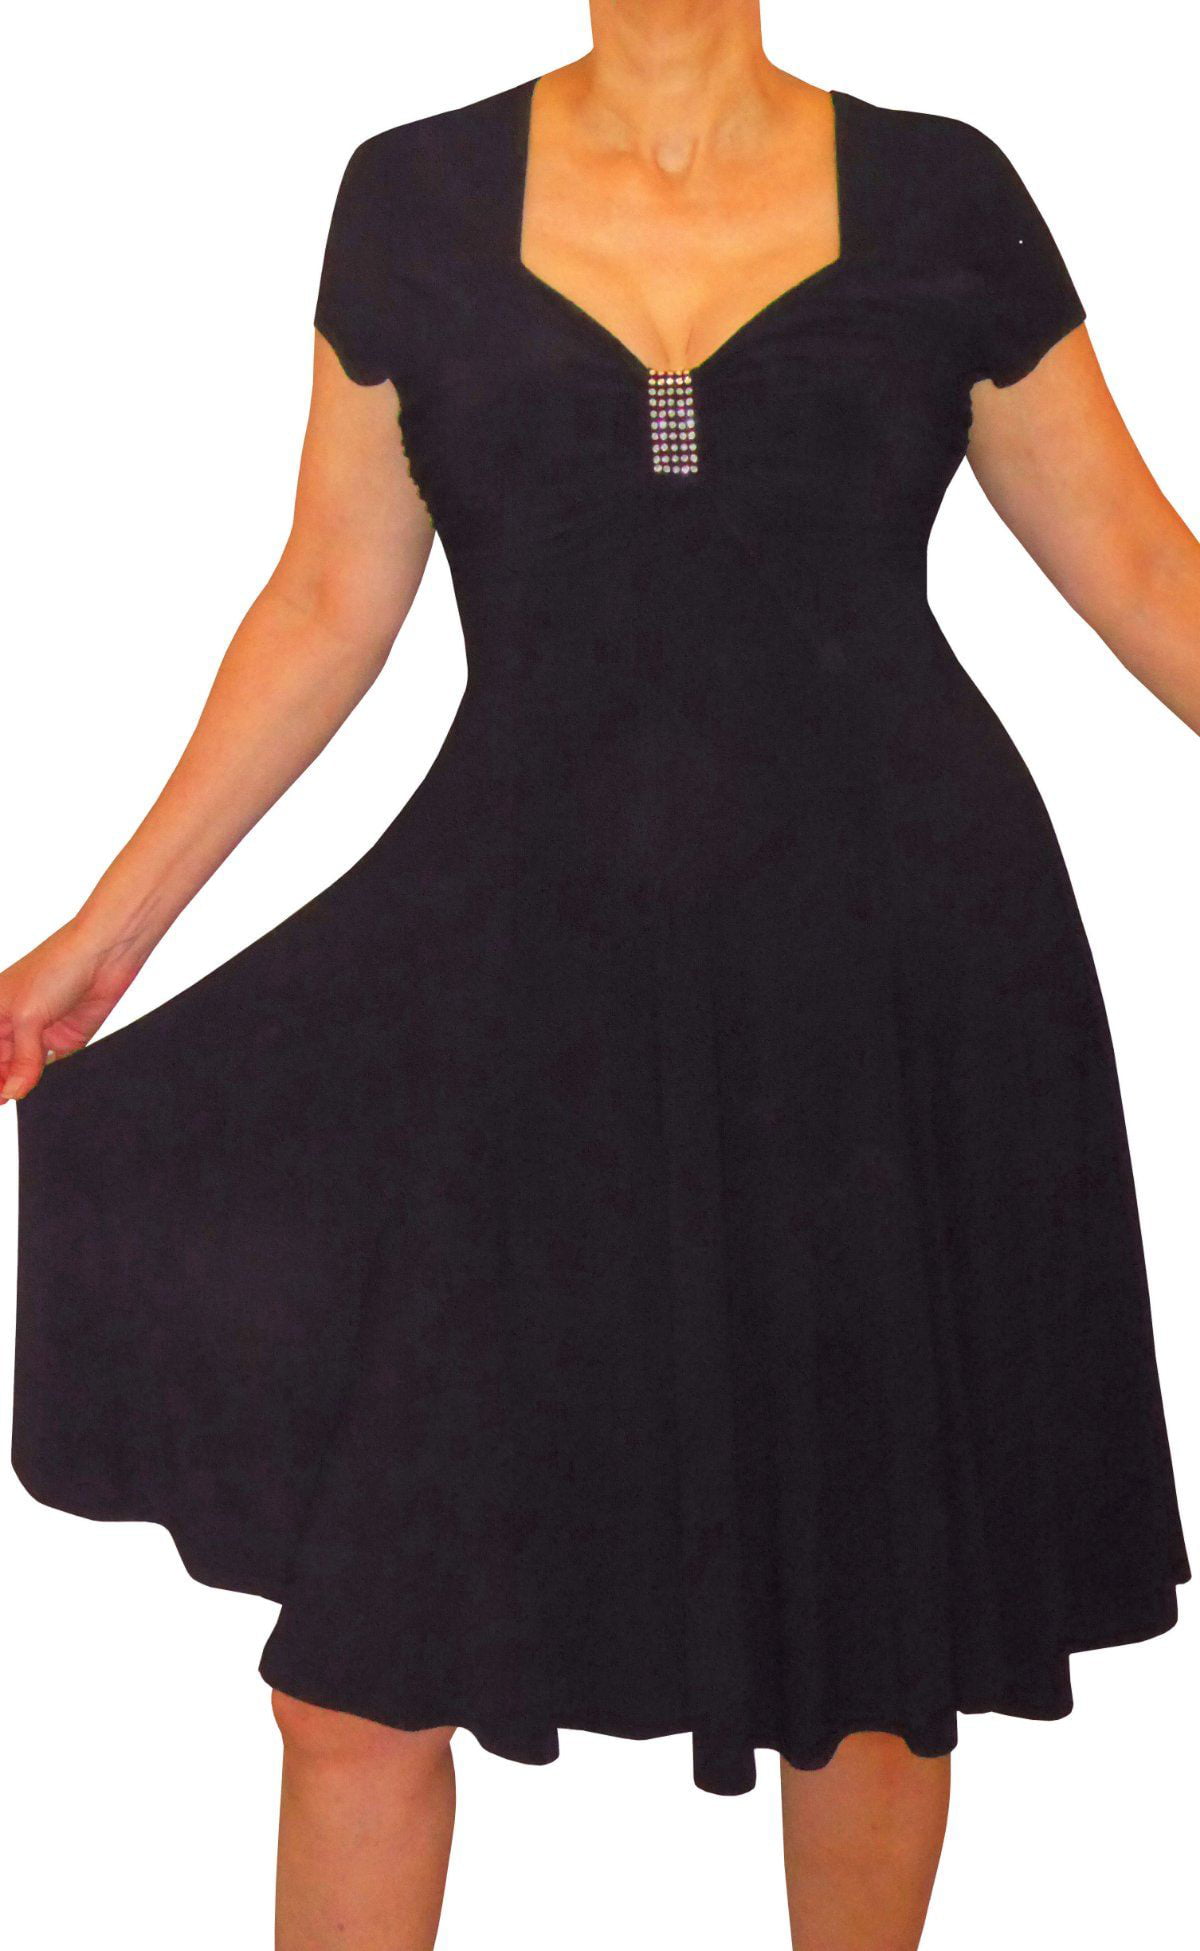 Funfash Plus Size Clothing for Women Slimming Empire Waist Black